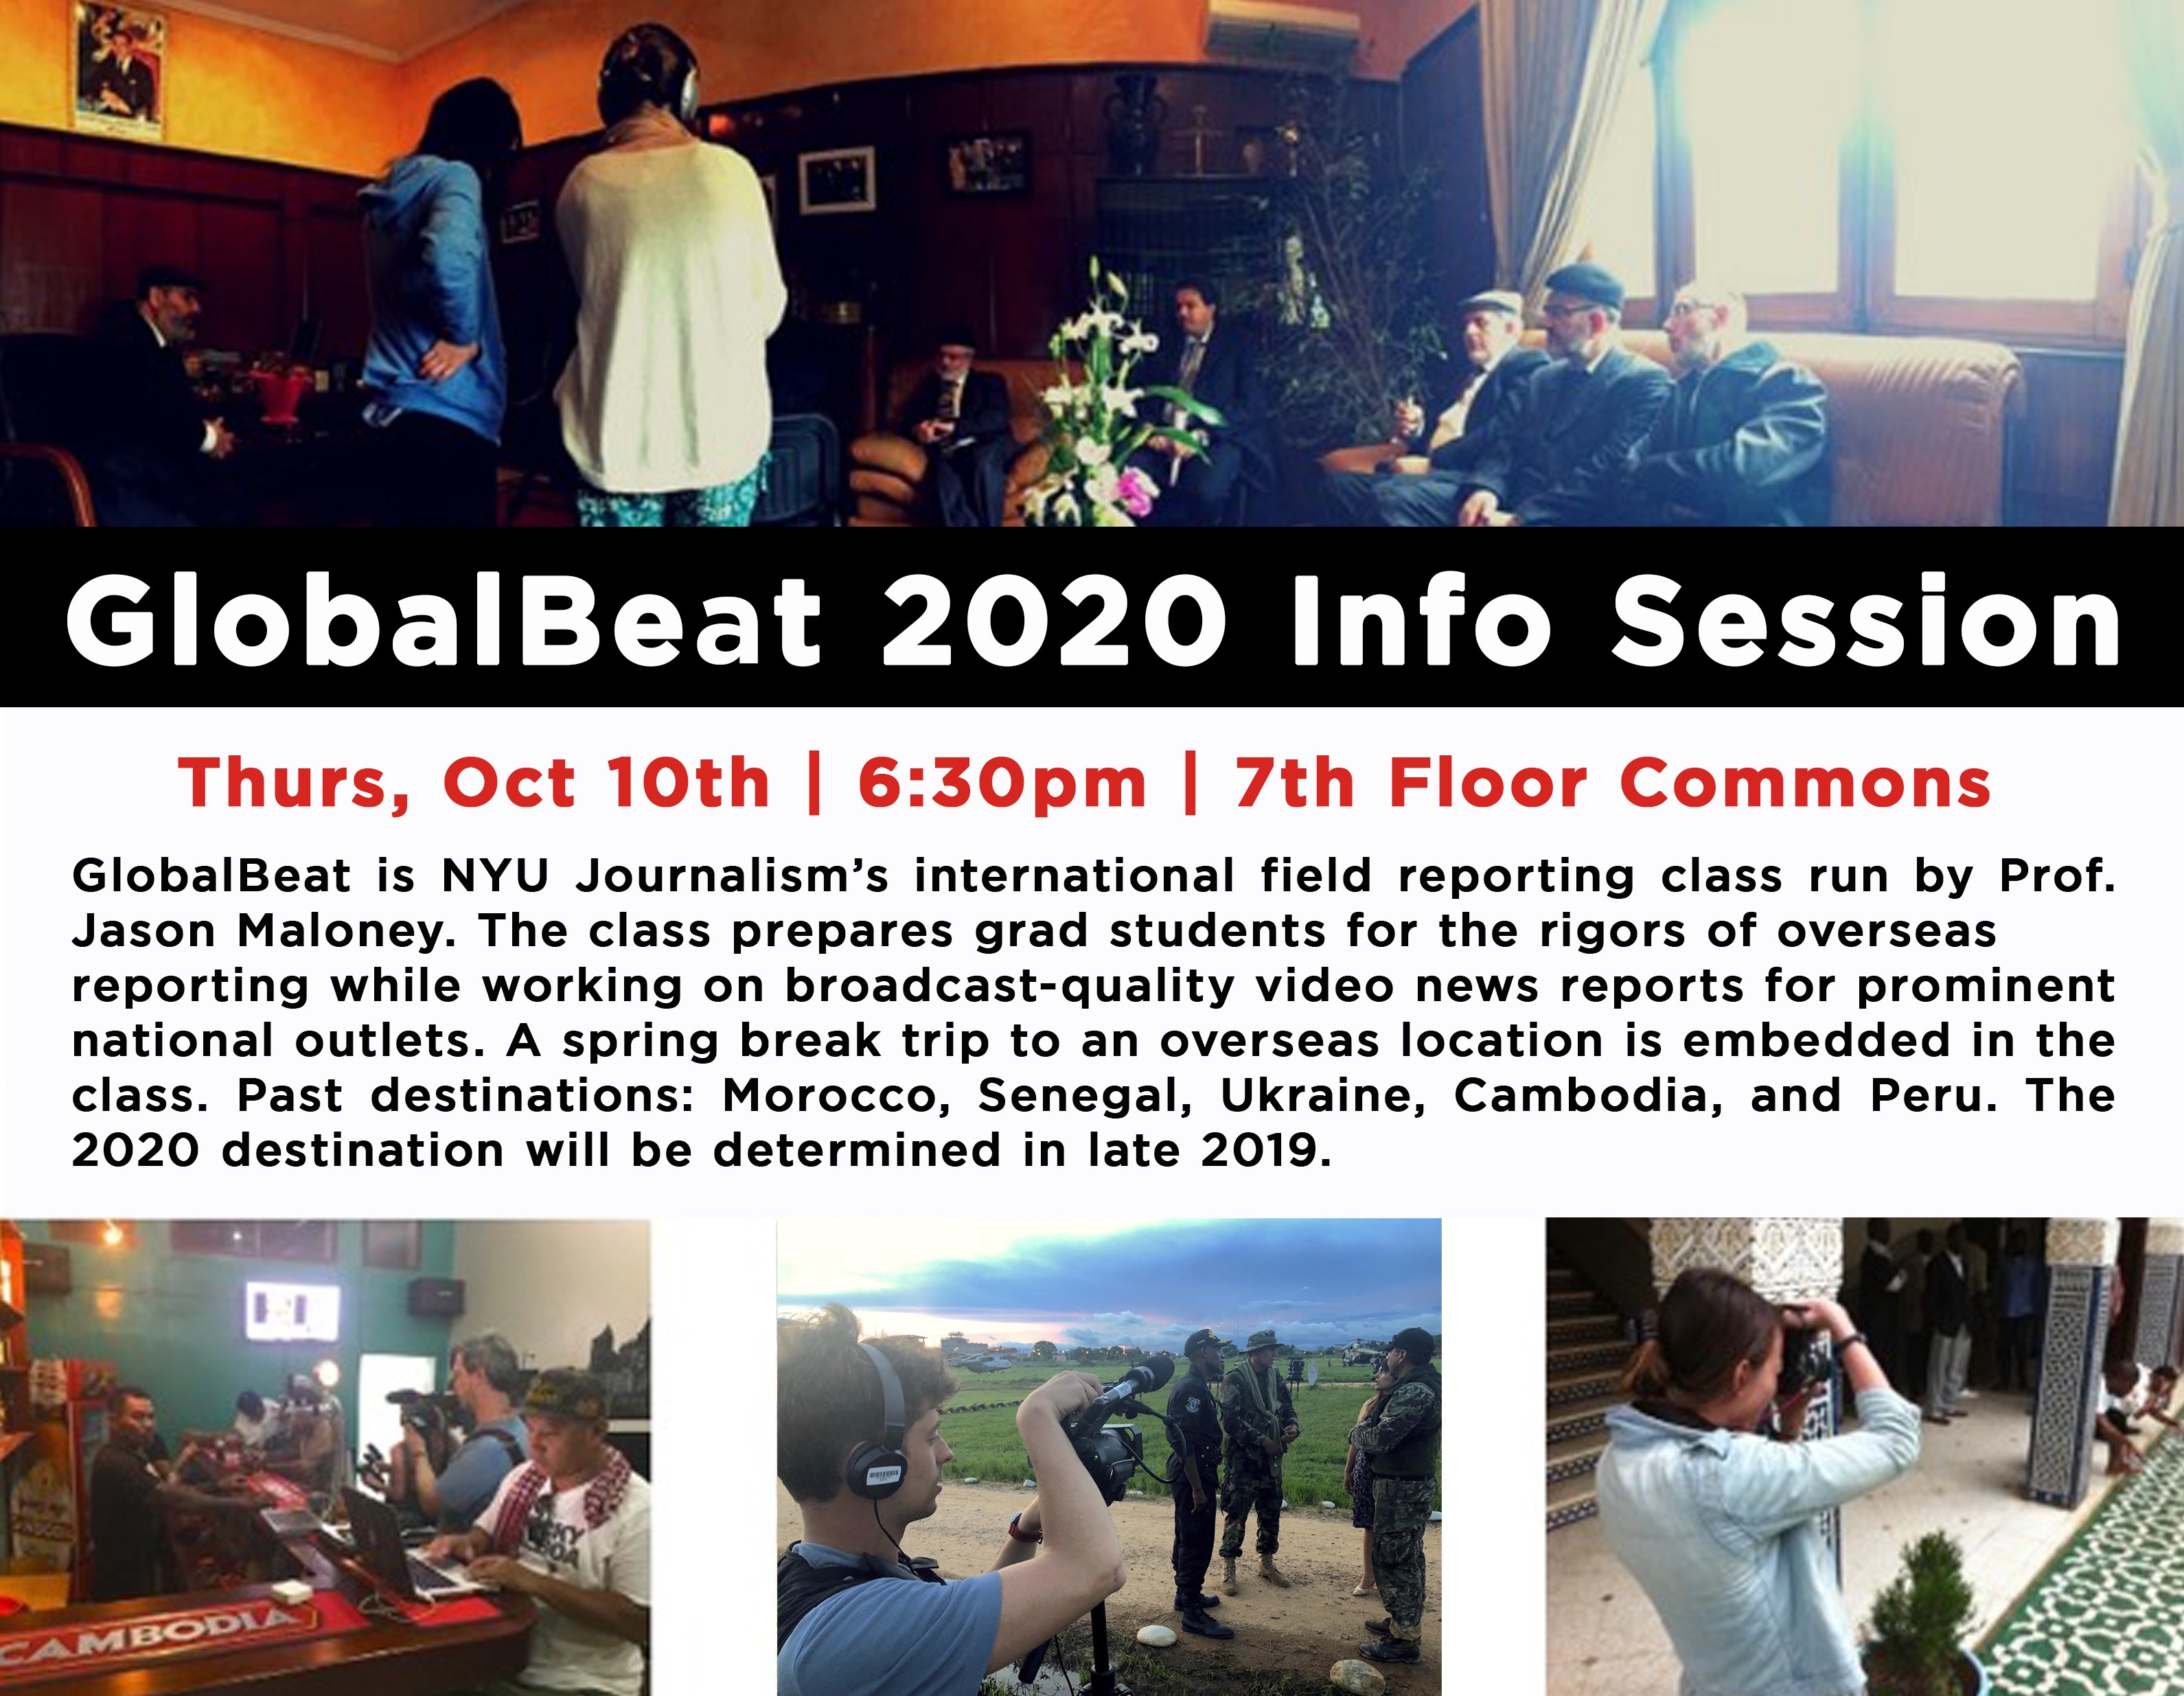 GlobalBeat 2020 Info Session